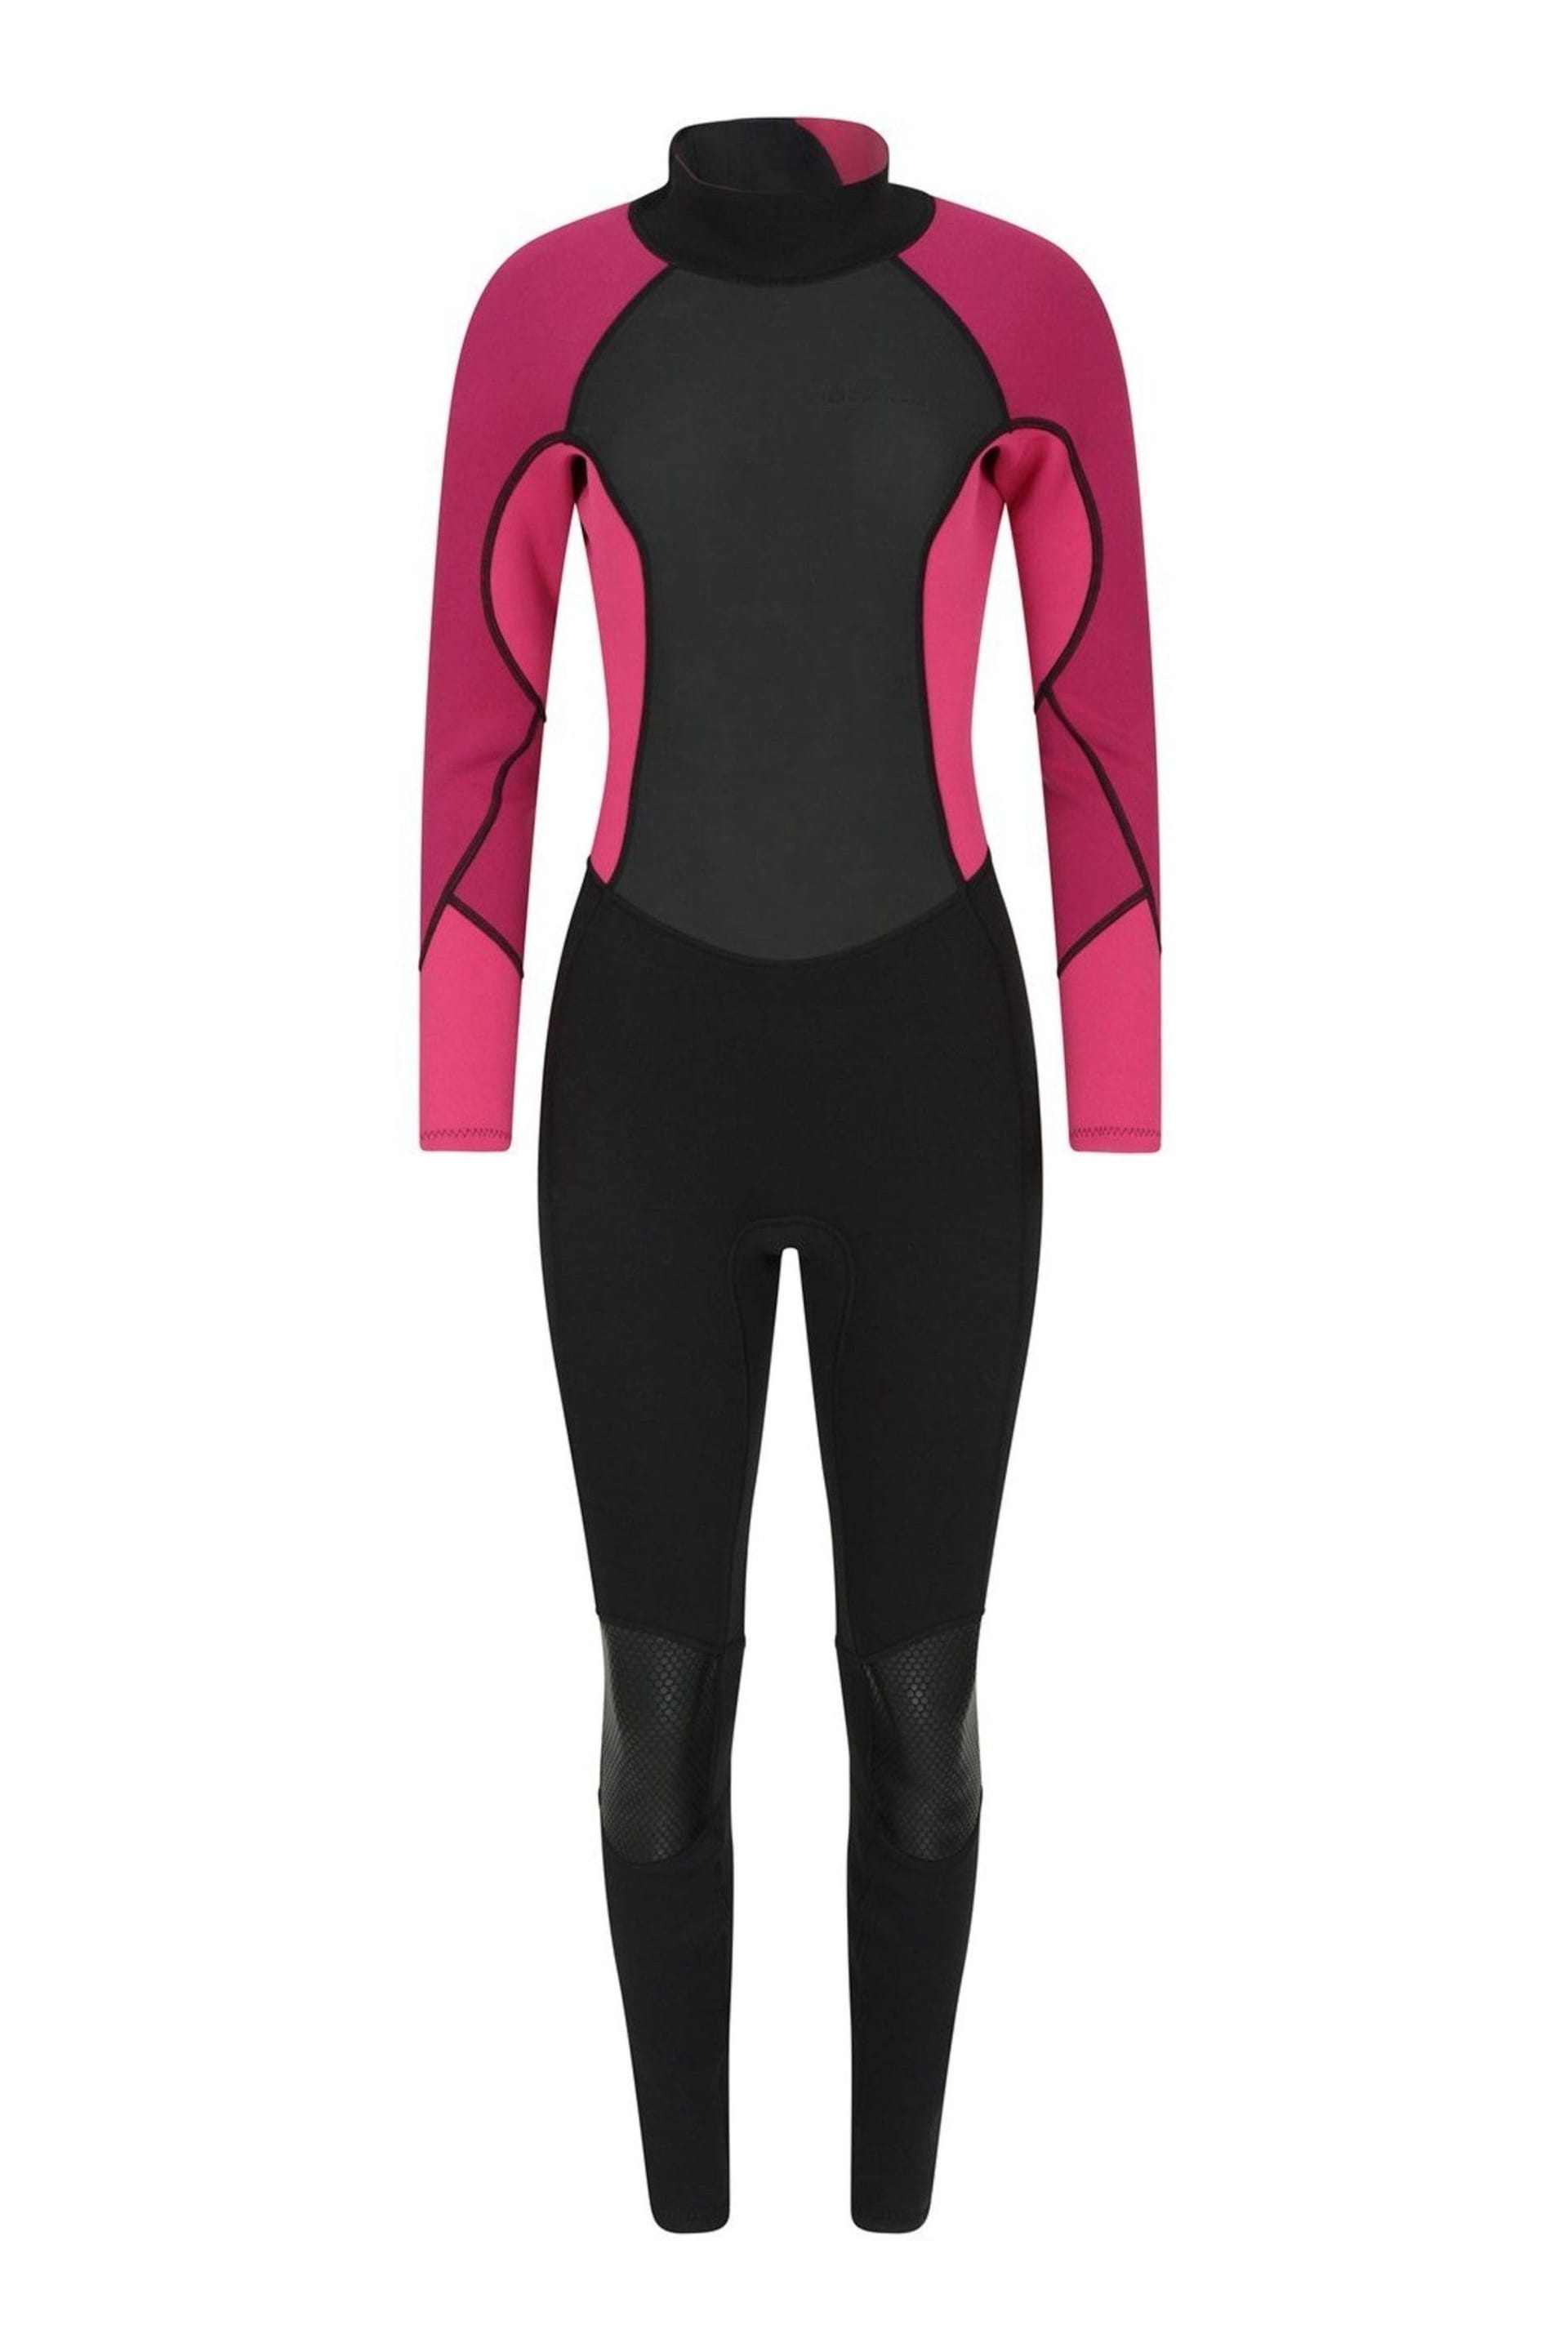 Mountain Warehouse Pink Womens Full Length Neoprene Wetsuit - Image 1 of 4